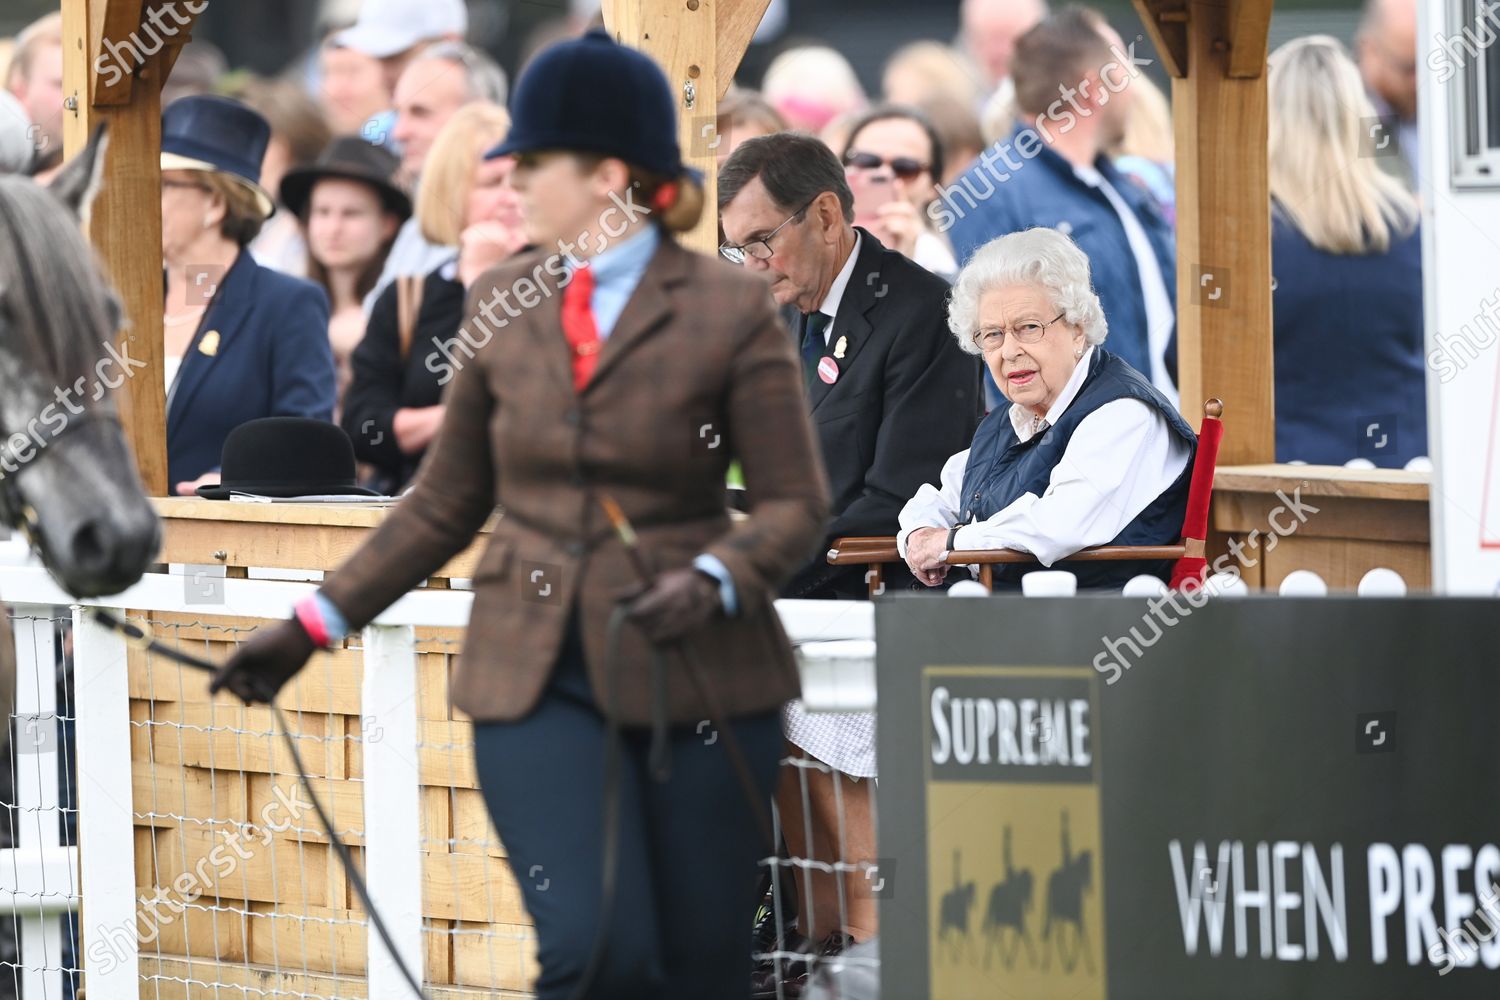 royal-windsor-horse-show-day-2-uk-shutterstock-editorial-12193155t.jpg